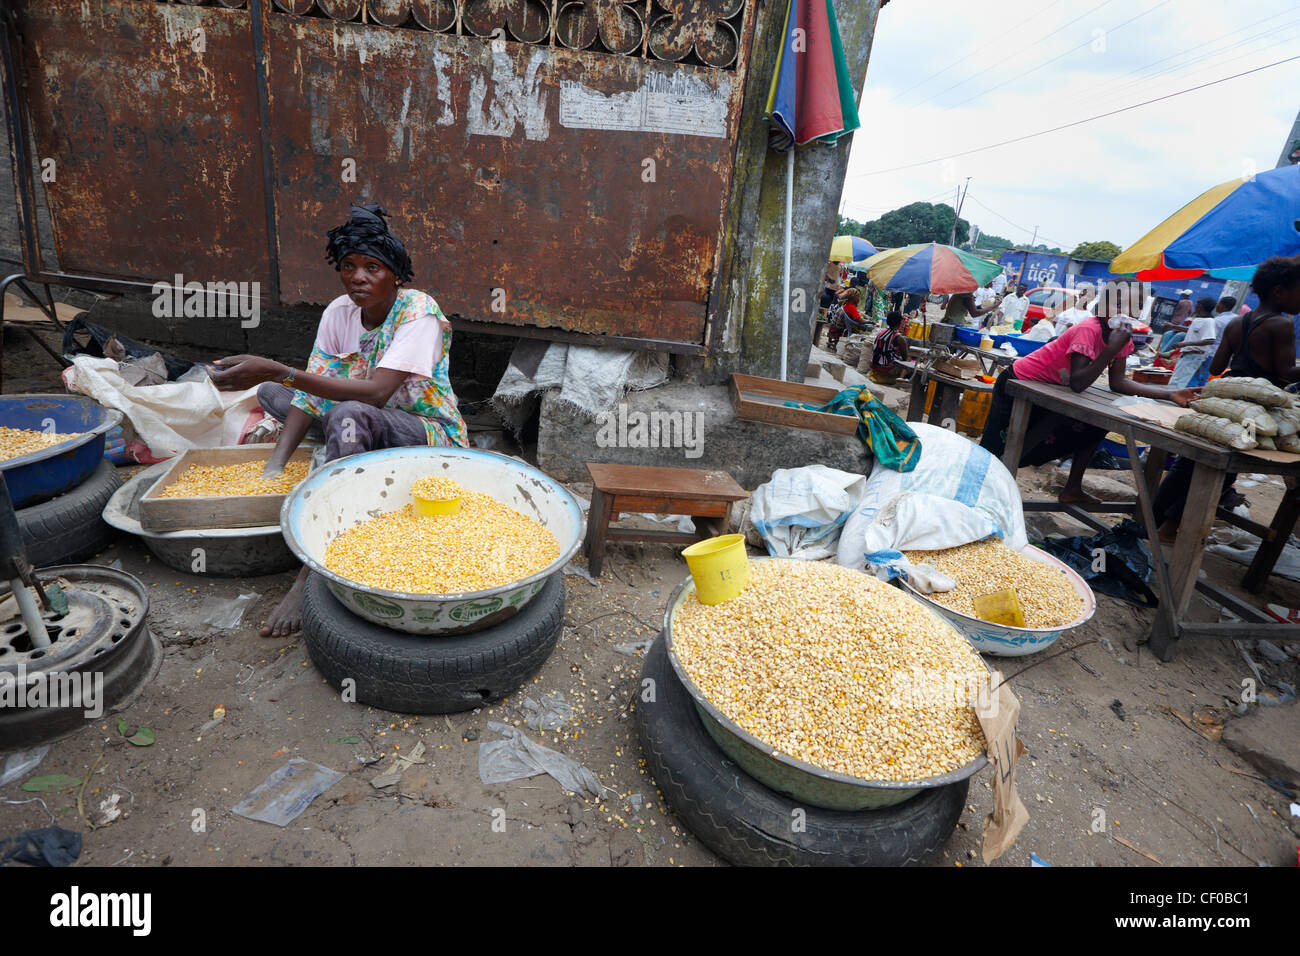 Lebensmittel-Markt, Kinshasa, demokratische Republik Kongo, Afrika Stockfoto